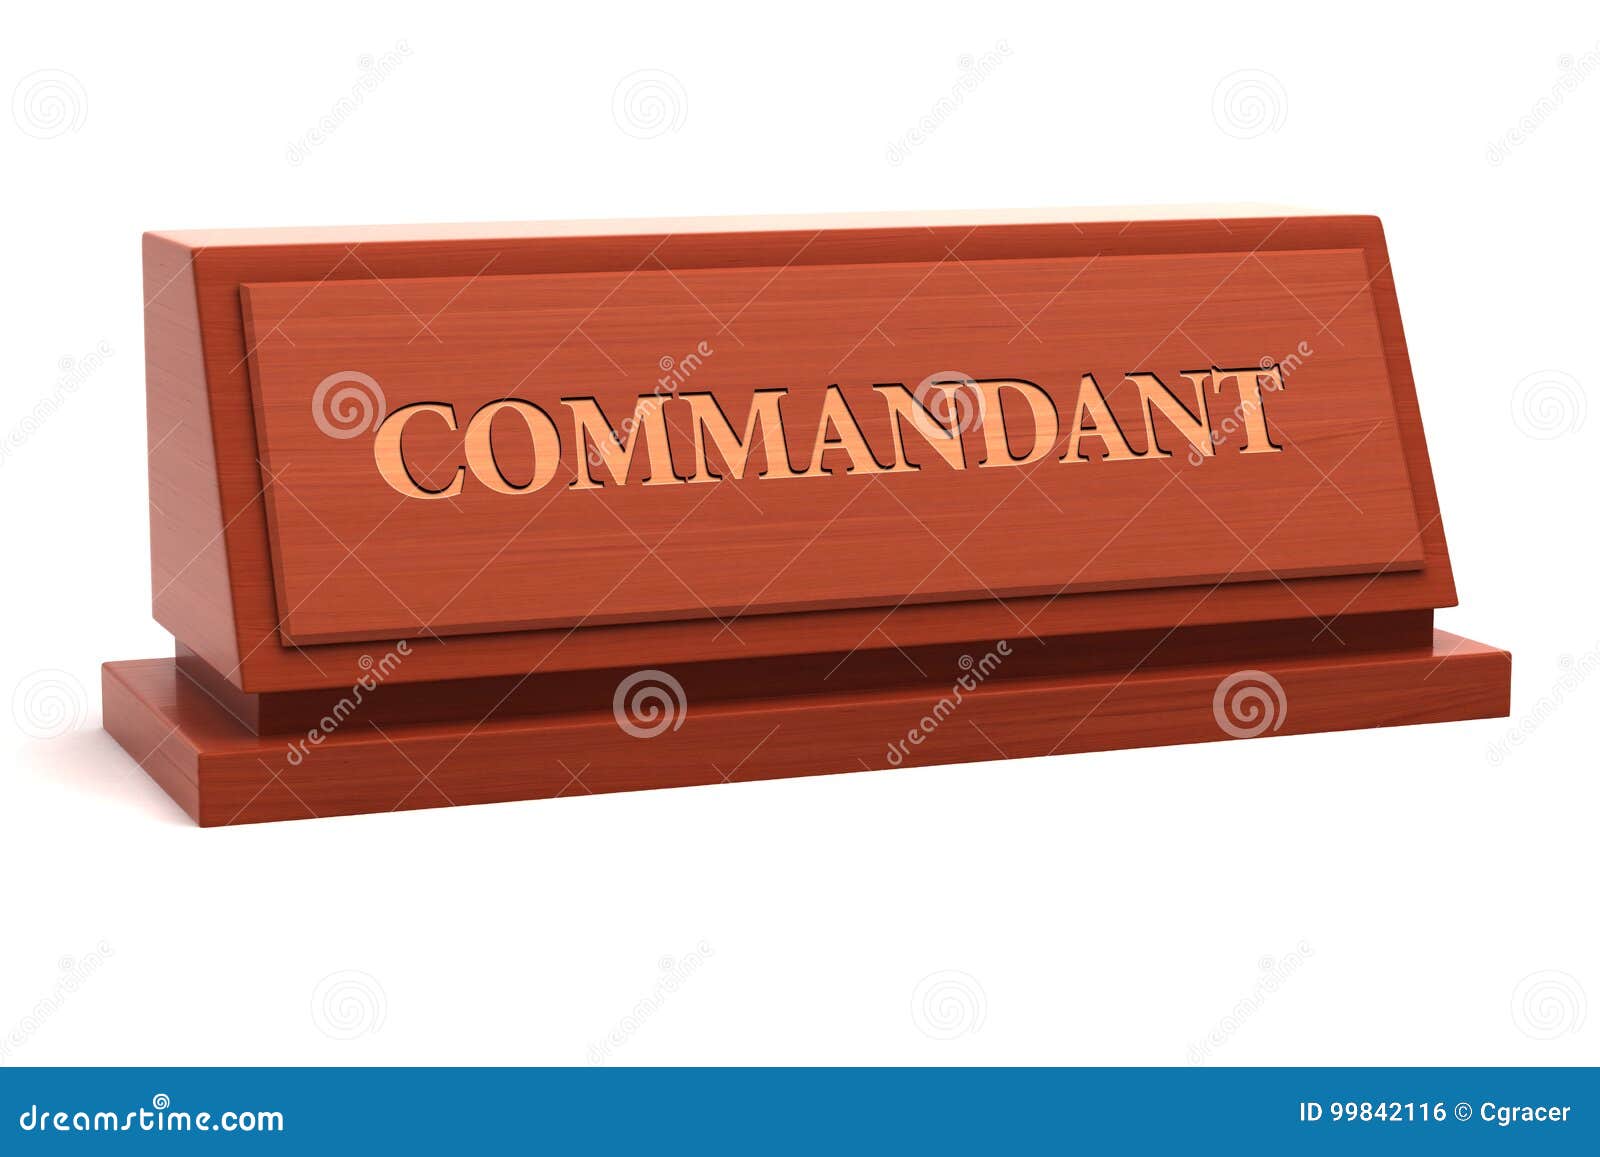 commandant job title